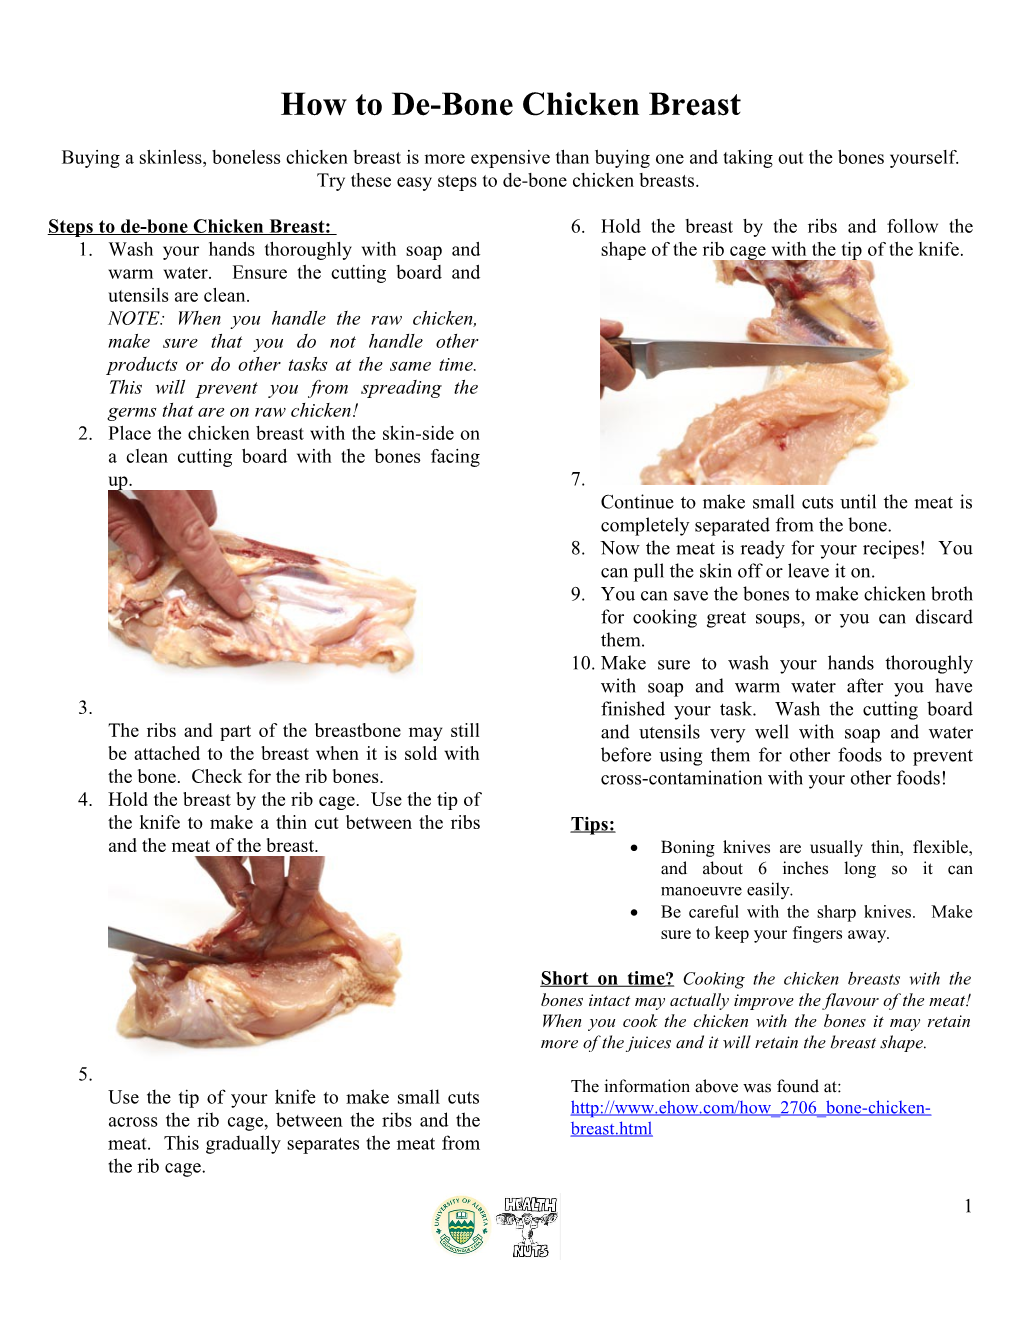 How to Bone Chicken Breast